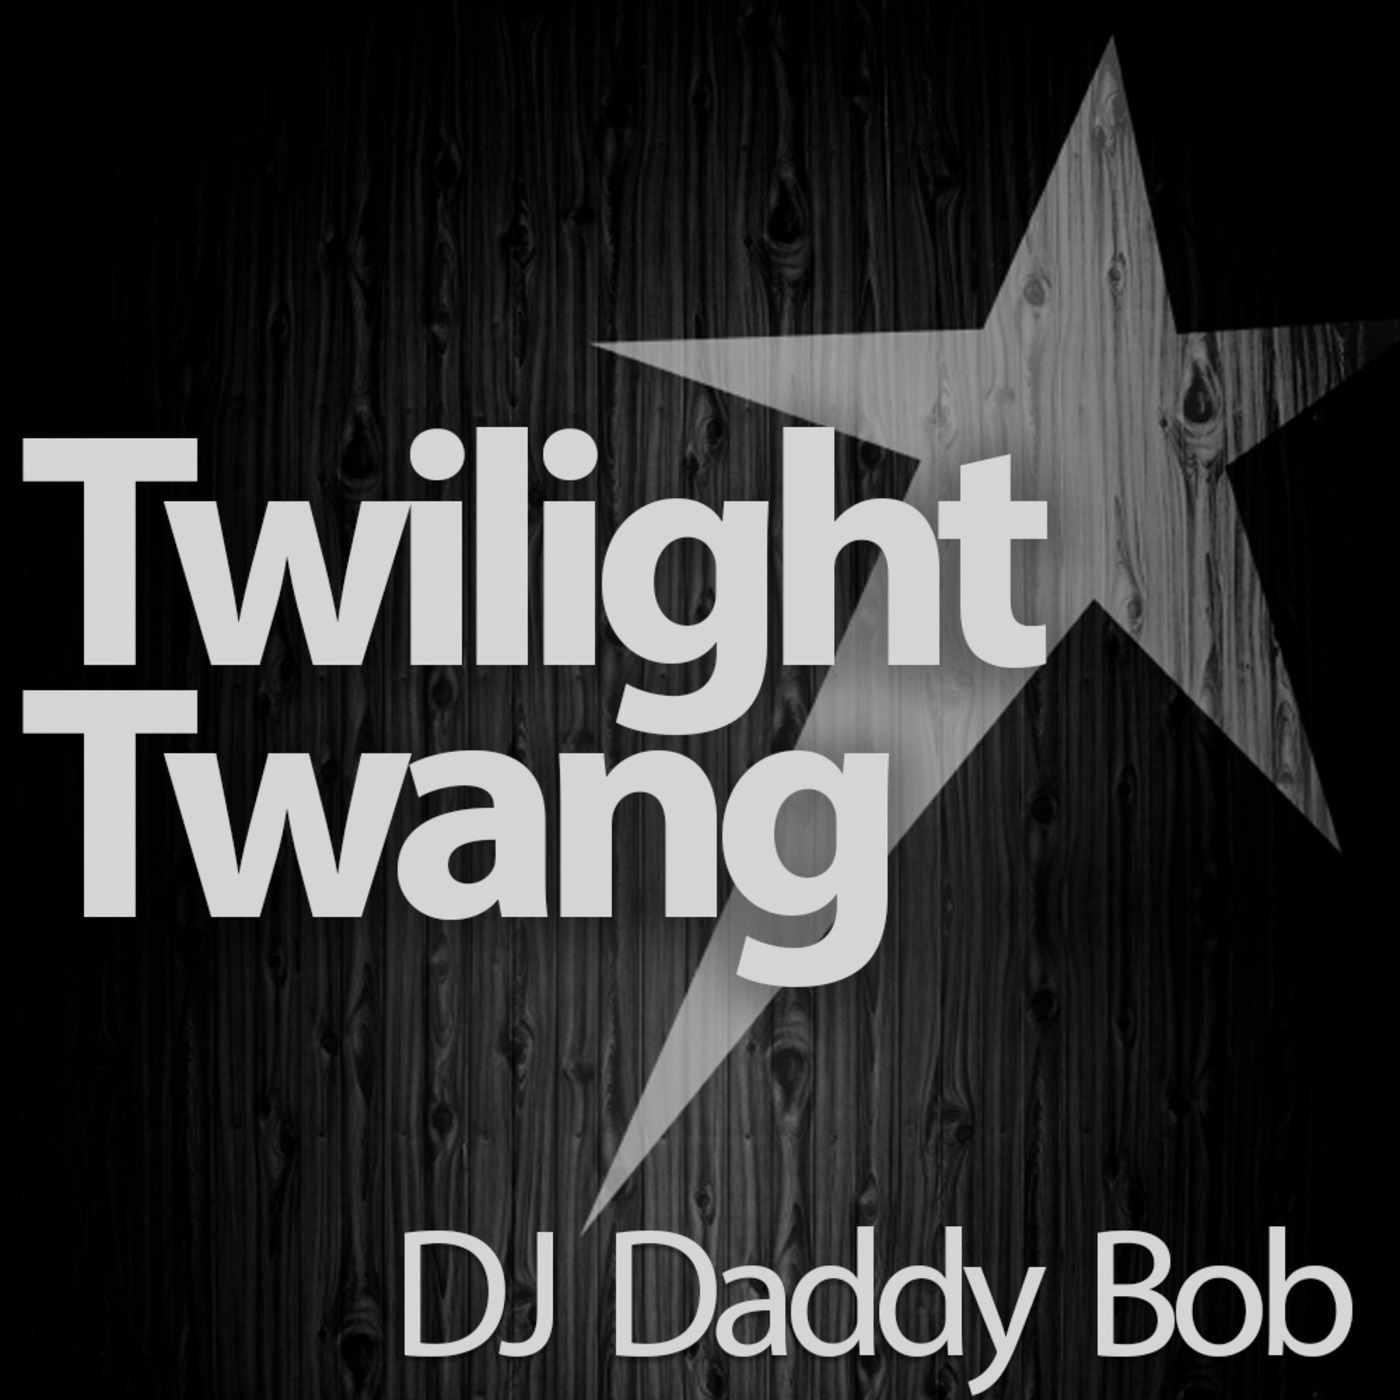 DJ Daddy Bob presents Twilight Twang